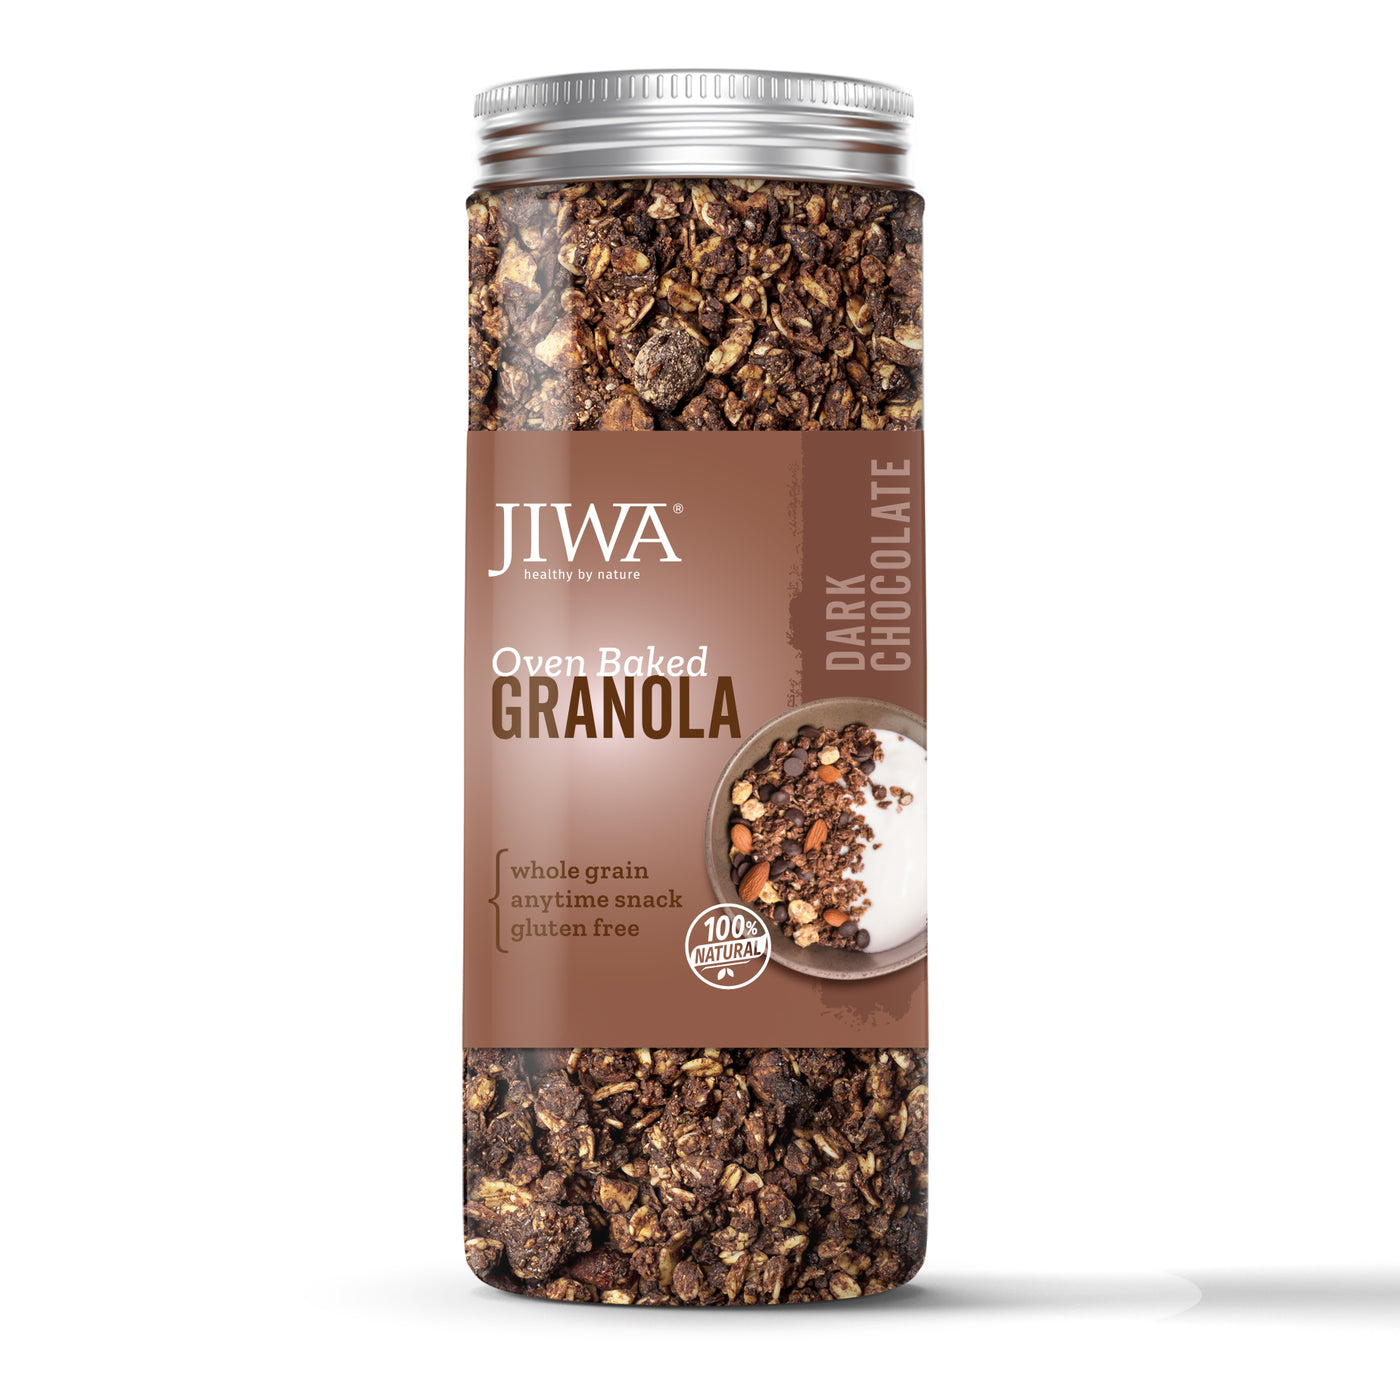 buy granola online-jiwa organic oats